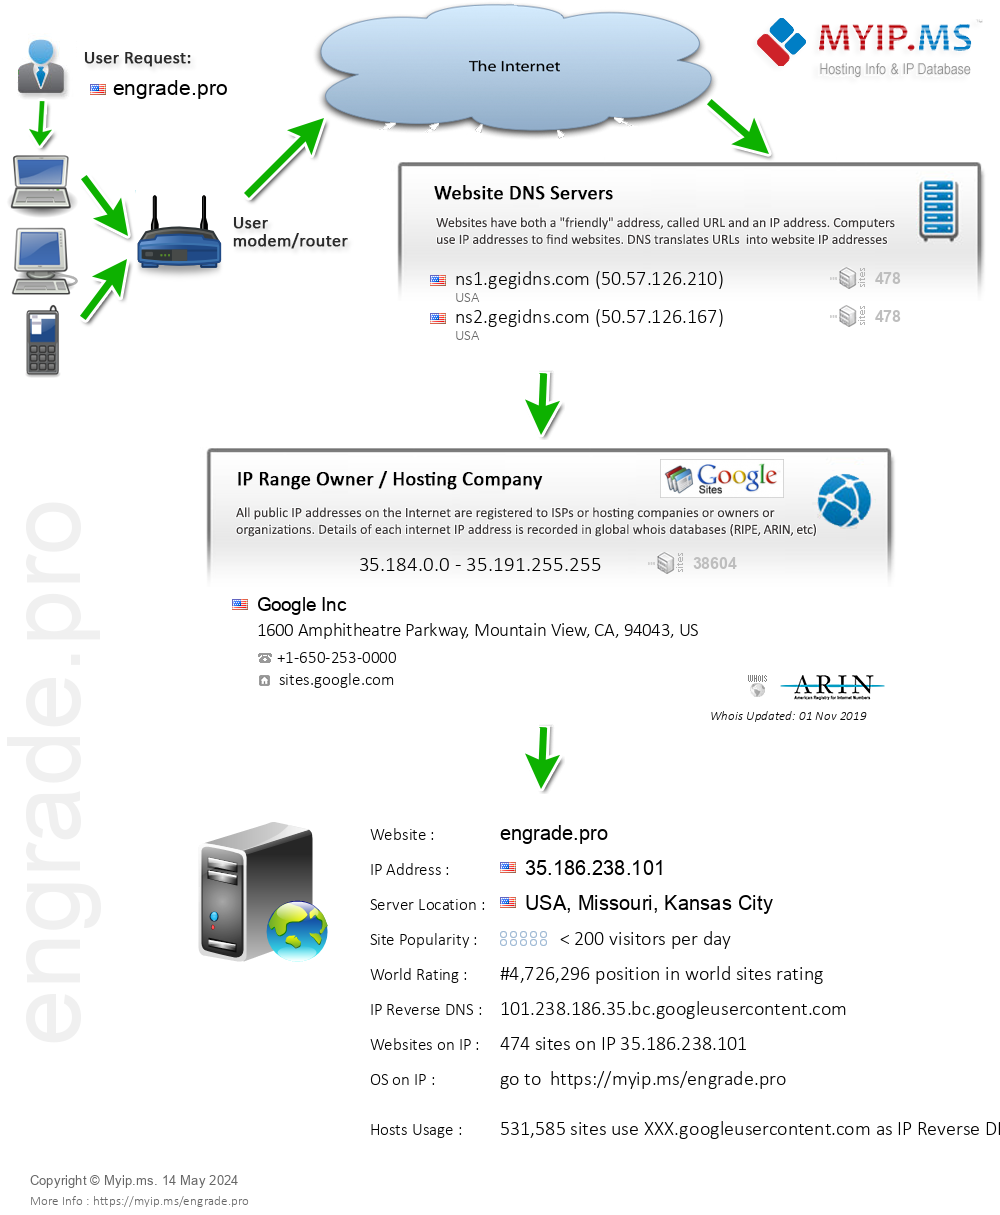 Engrade.pro - Website Hosting Visual IP Diagram